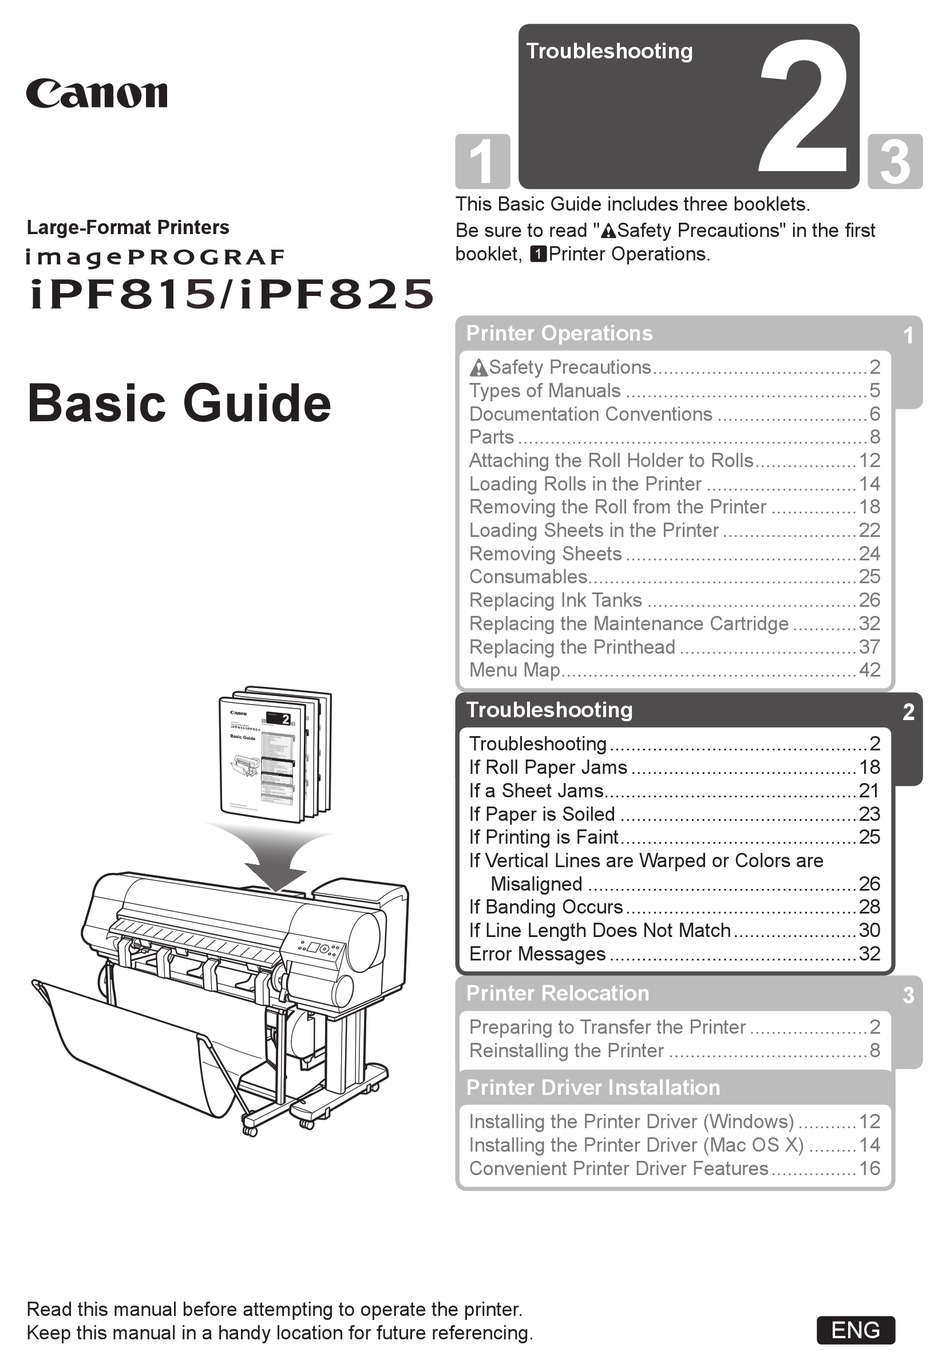 CANON IMAGEPROGRAF IPF825 BASIC GUIDE NO.2 BASIC MANUAL Pdf Download